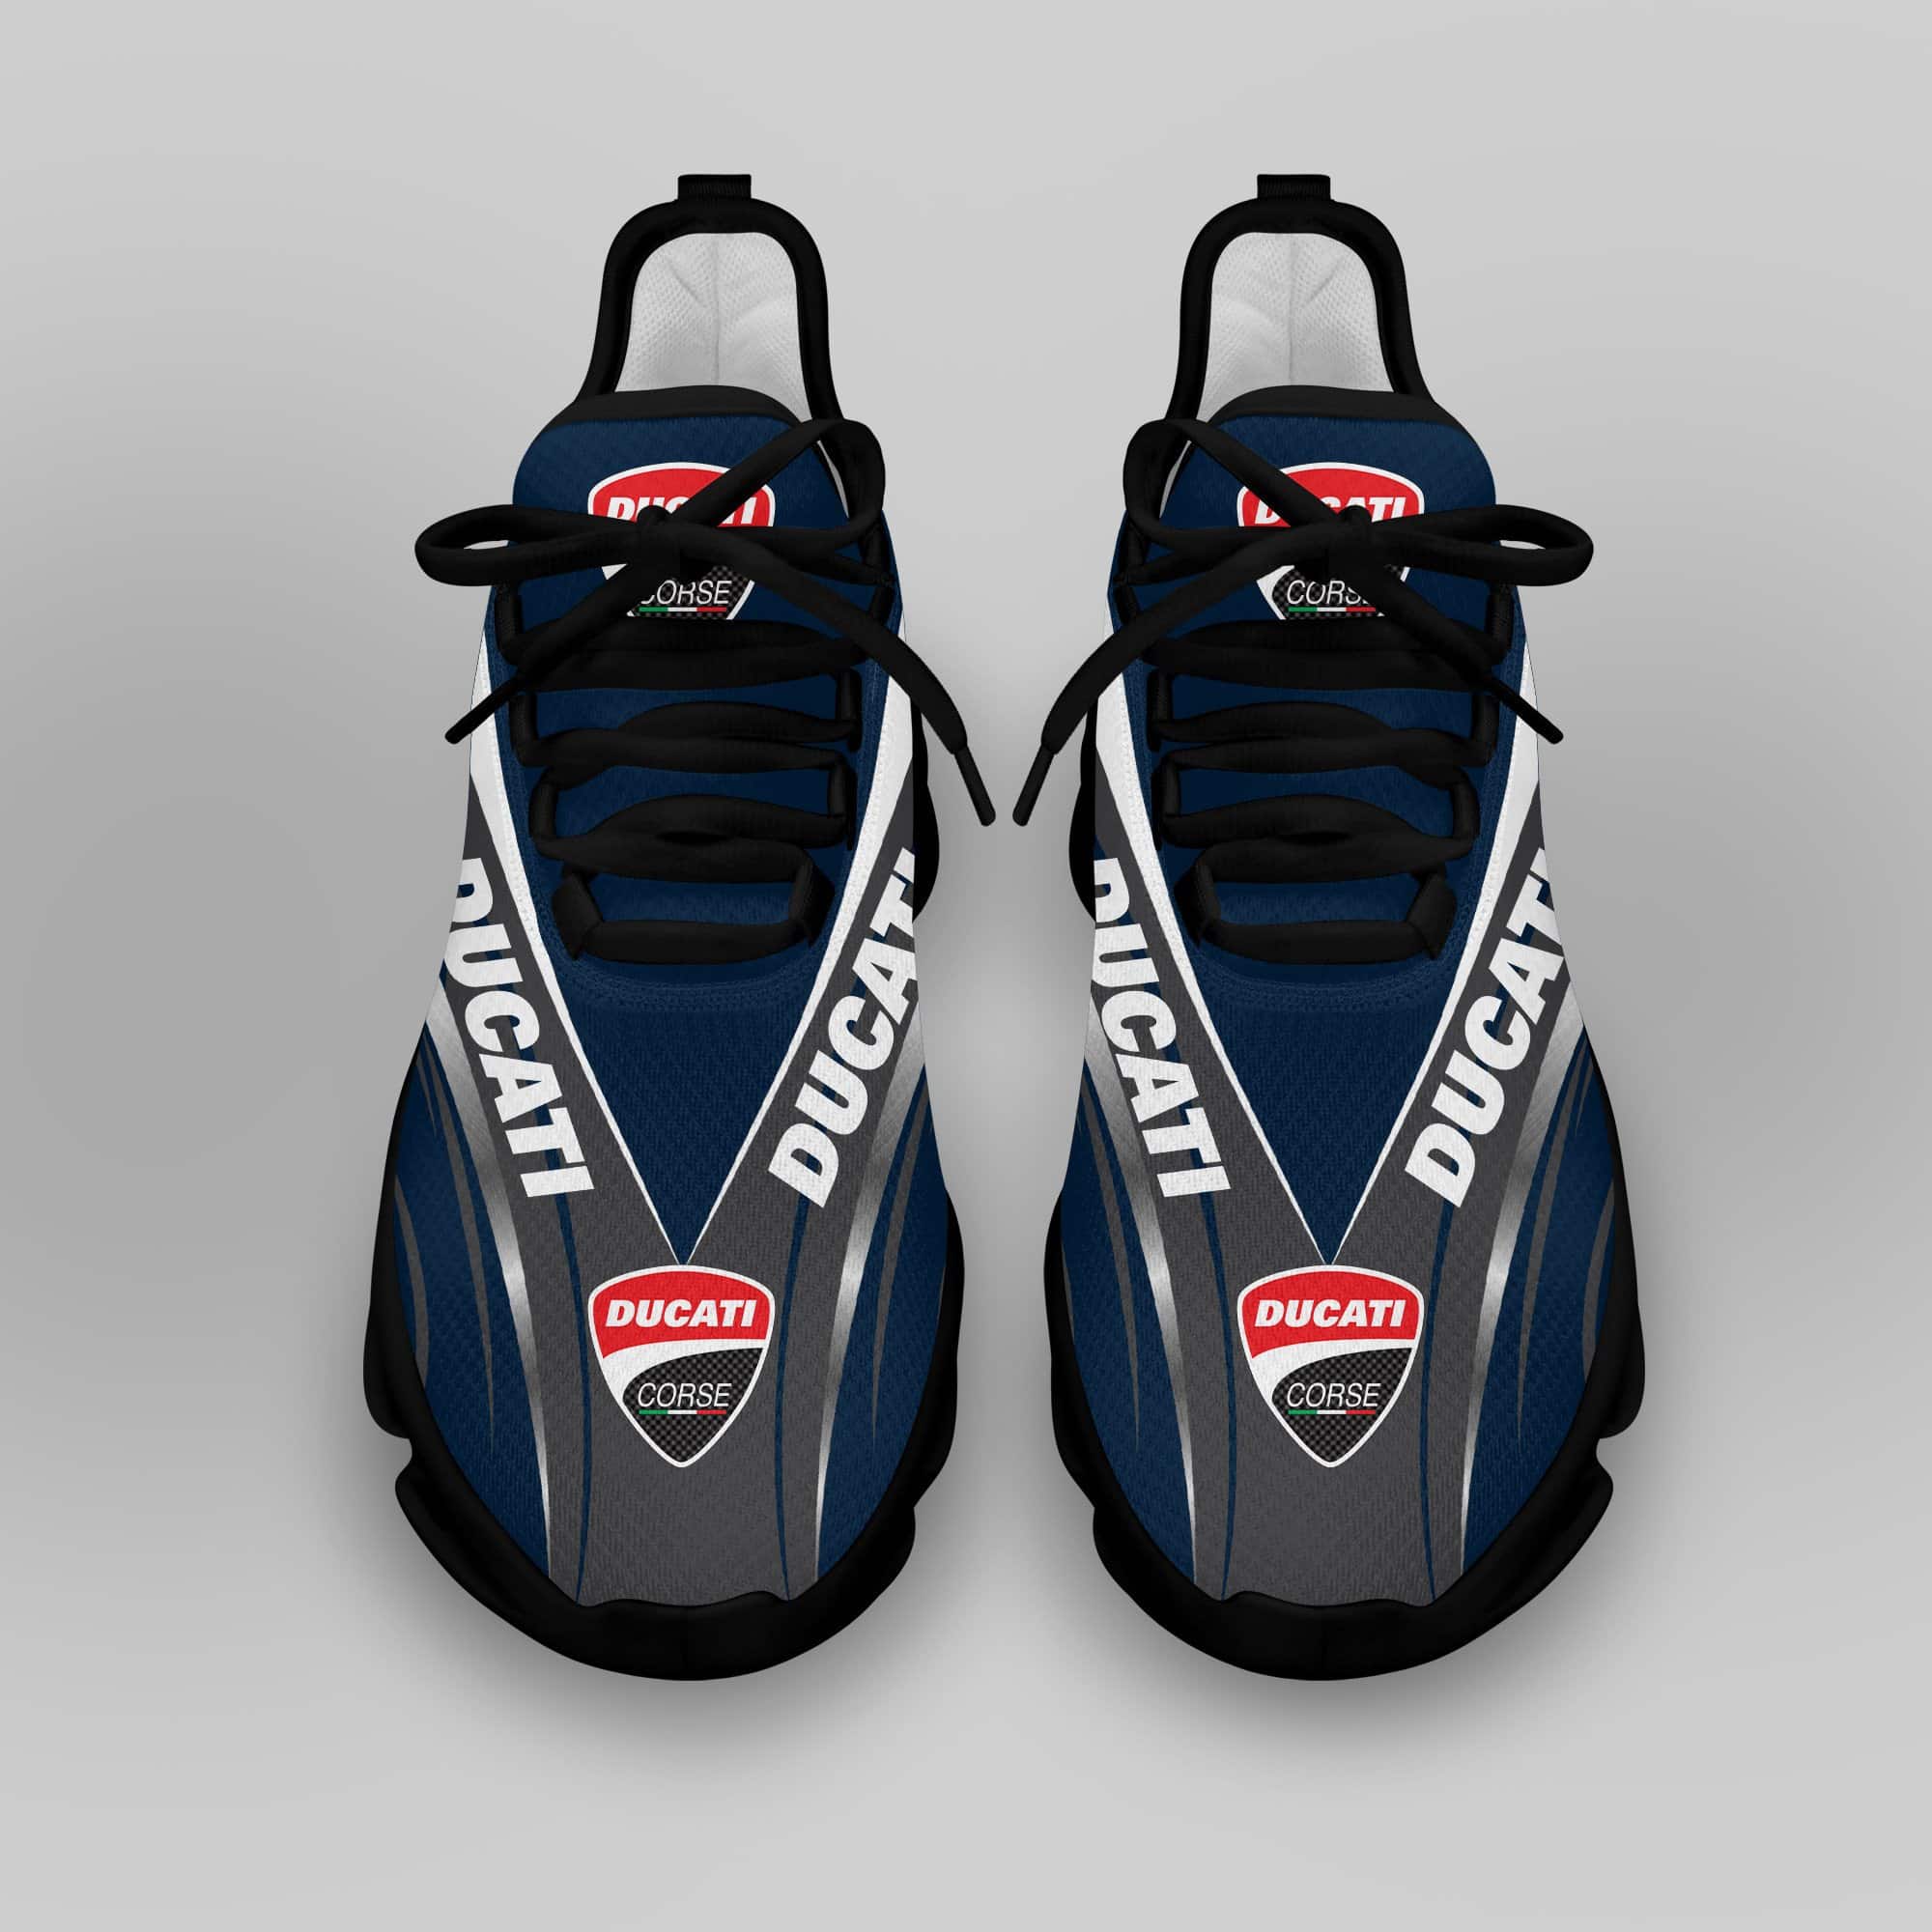 Ducati Racing Running Shoes Max Soul Shoes Sneakers Ver 55 4